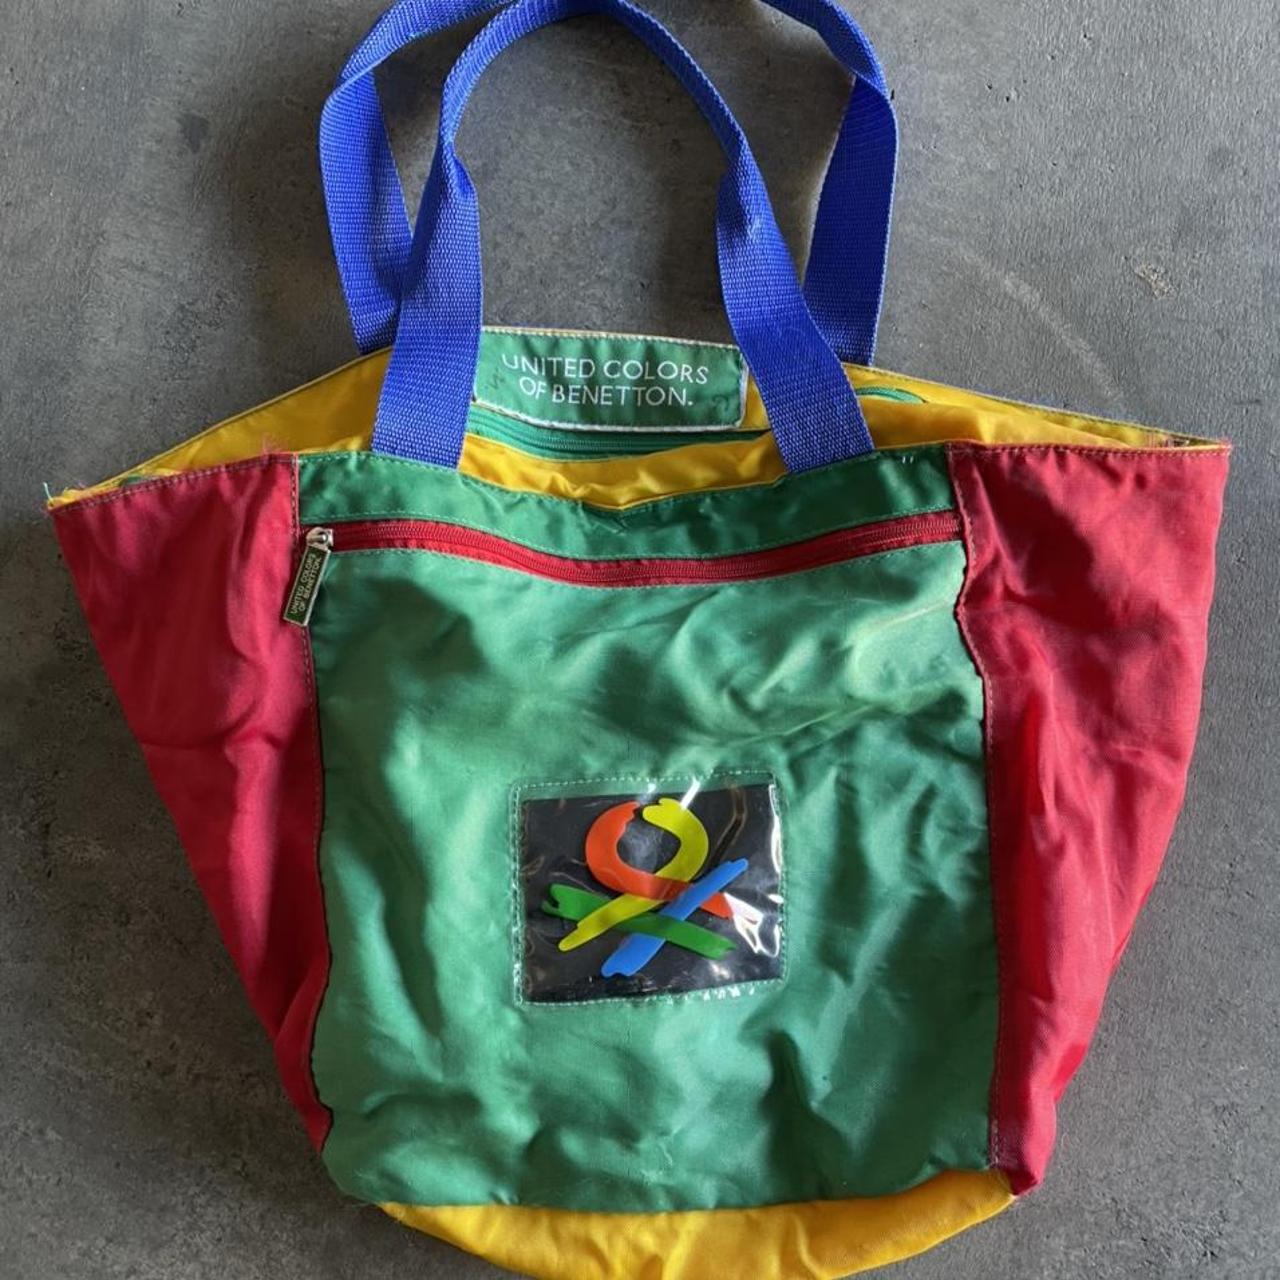 United Colors of Benetton Men's Bag | Depop